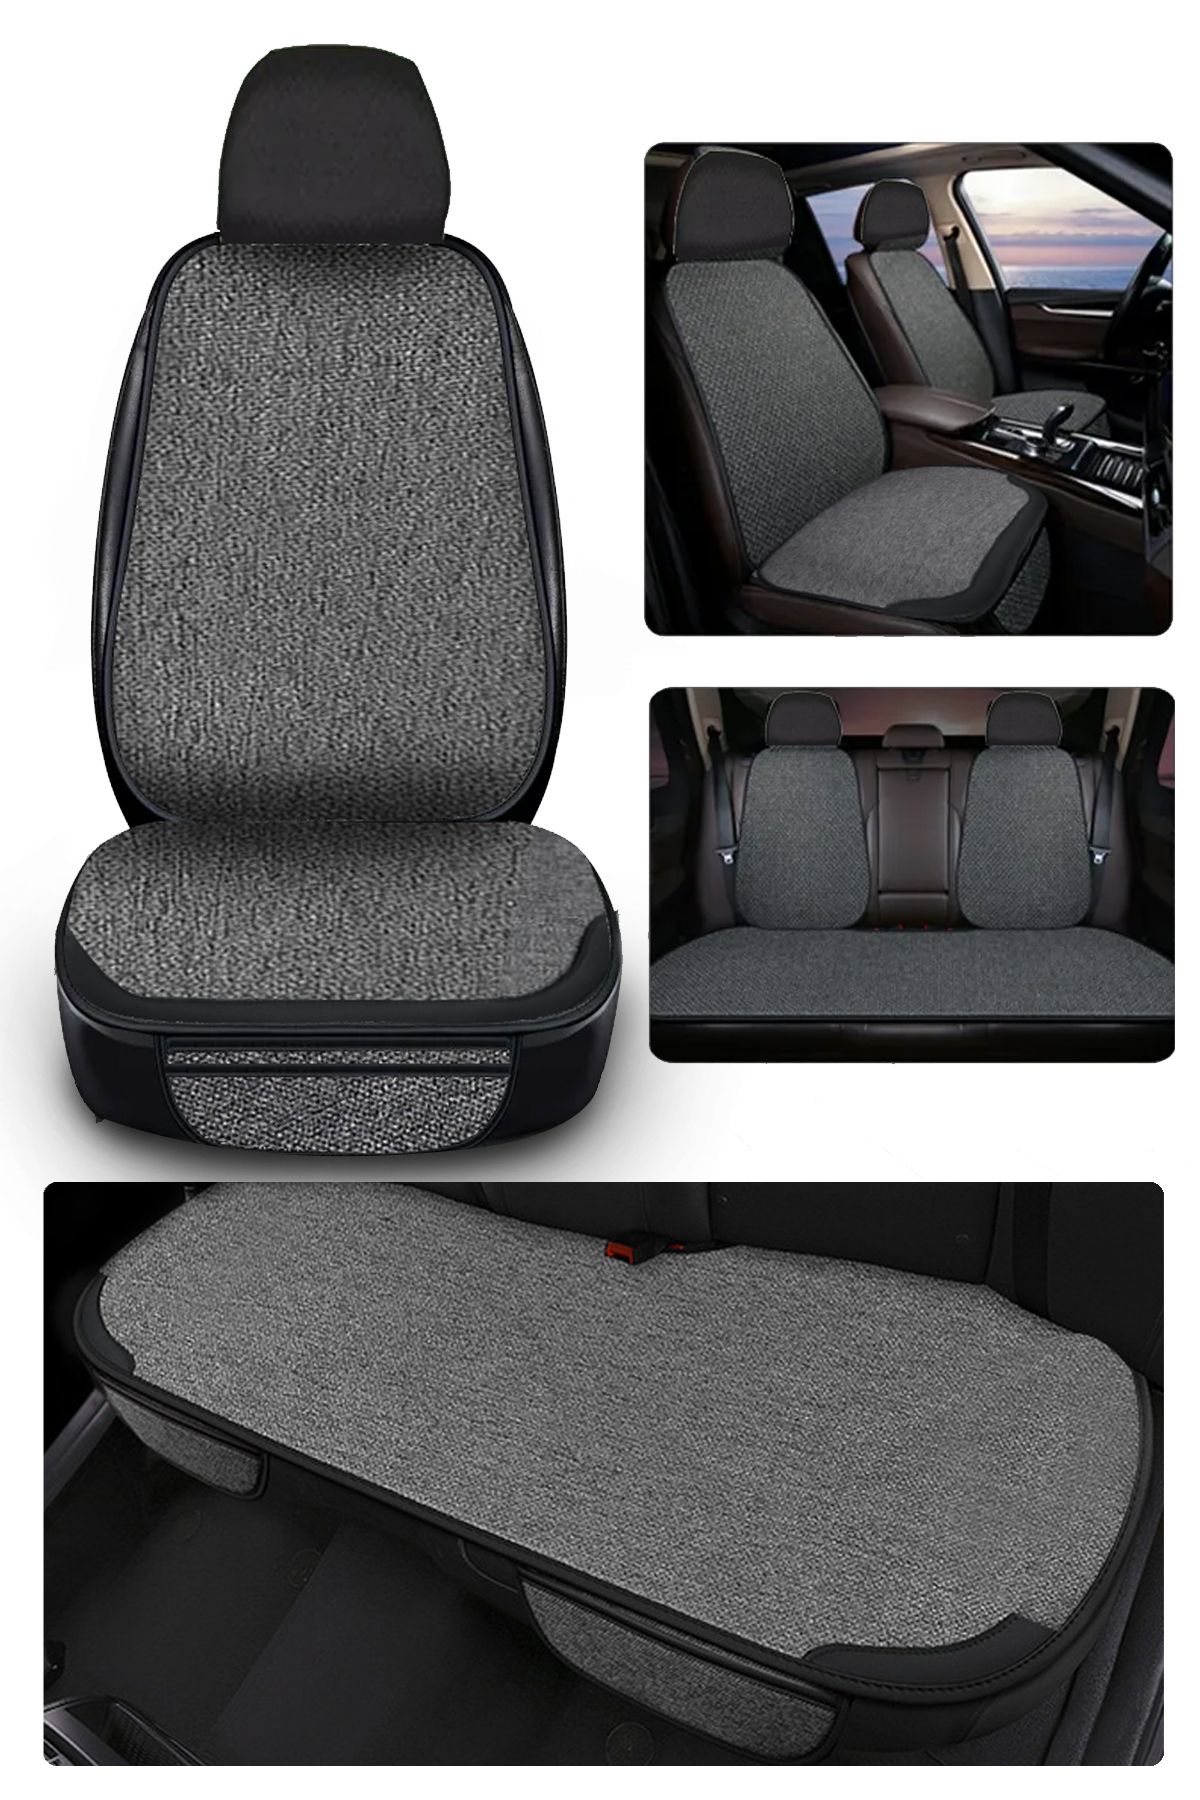 GM-DESIGN Linen Car Seat Cushion 7 Pieces - 5 Seats Full Set